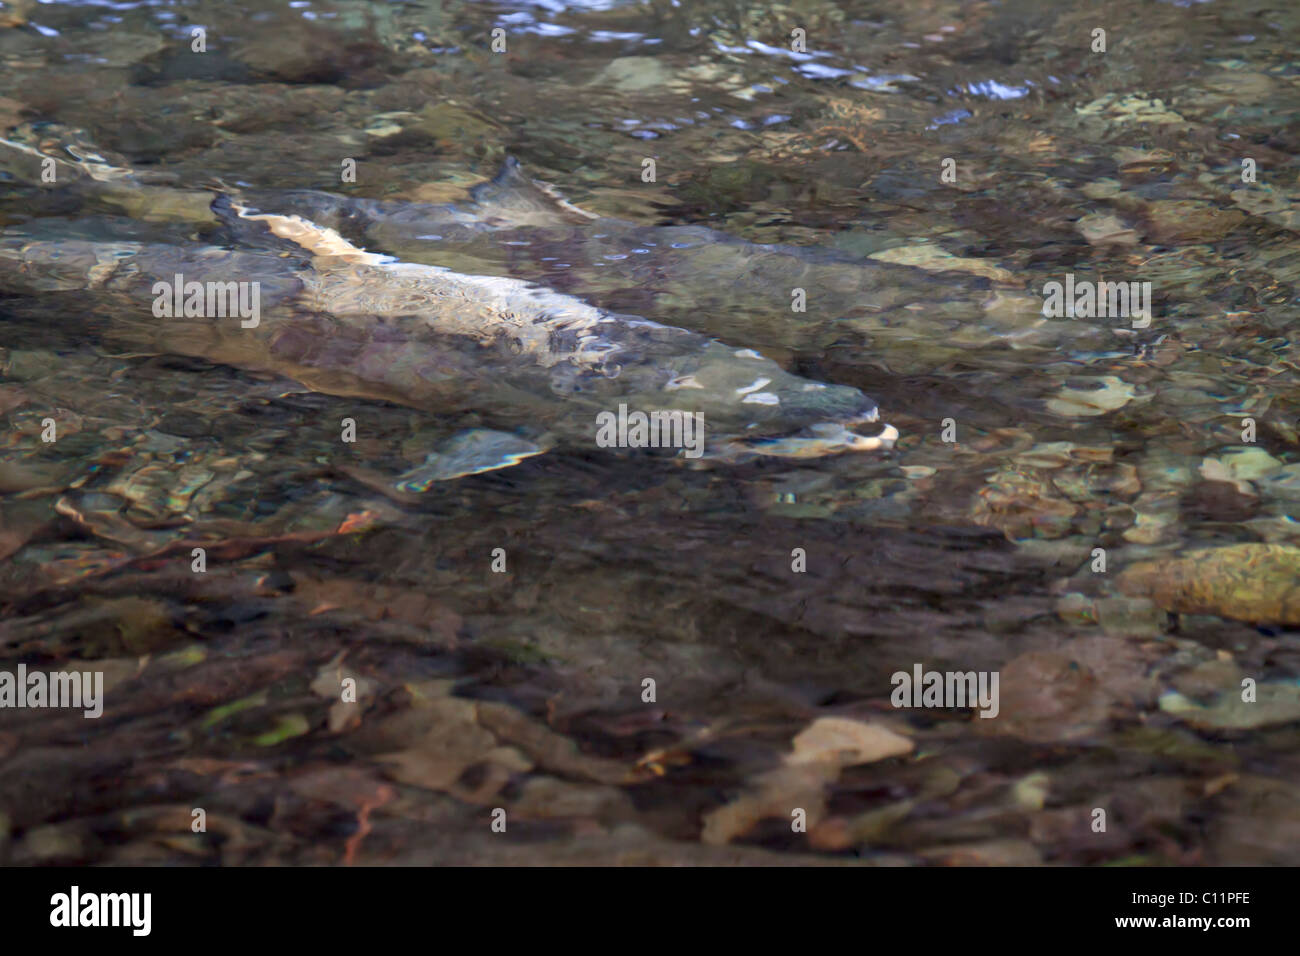 Chum salmon, Oncorhynchus keta, making their way upstream to spawn, Goldstream Park, Vancouver Island, British Columbia, Canada. Stock Photo